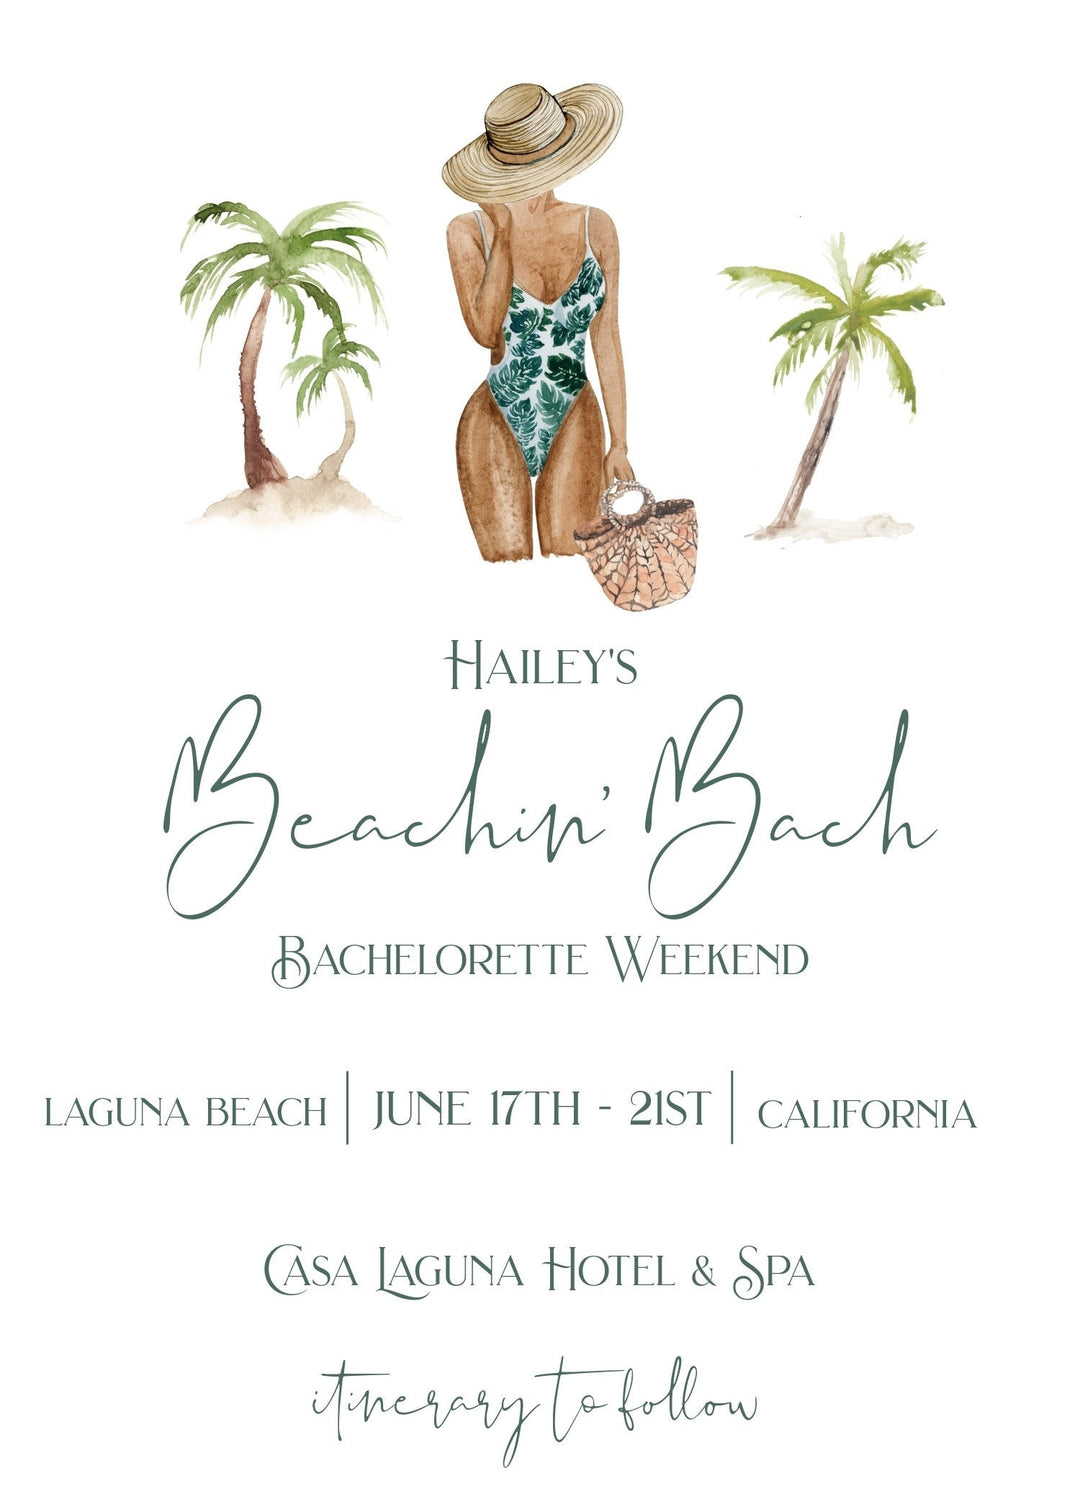 Beach Bachelorette Weekend Invitation - Beachin' Bach Invitation - Girls Trip Weekend Invitation - Beach Bachelorette Party Invitation